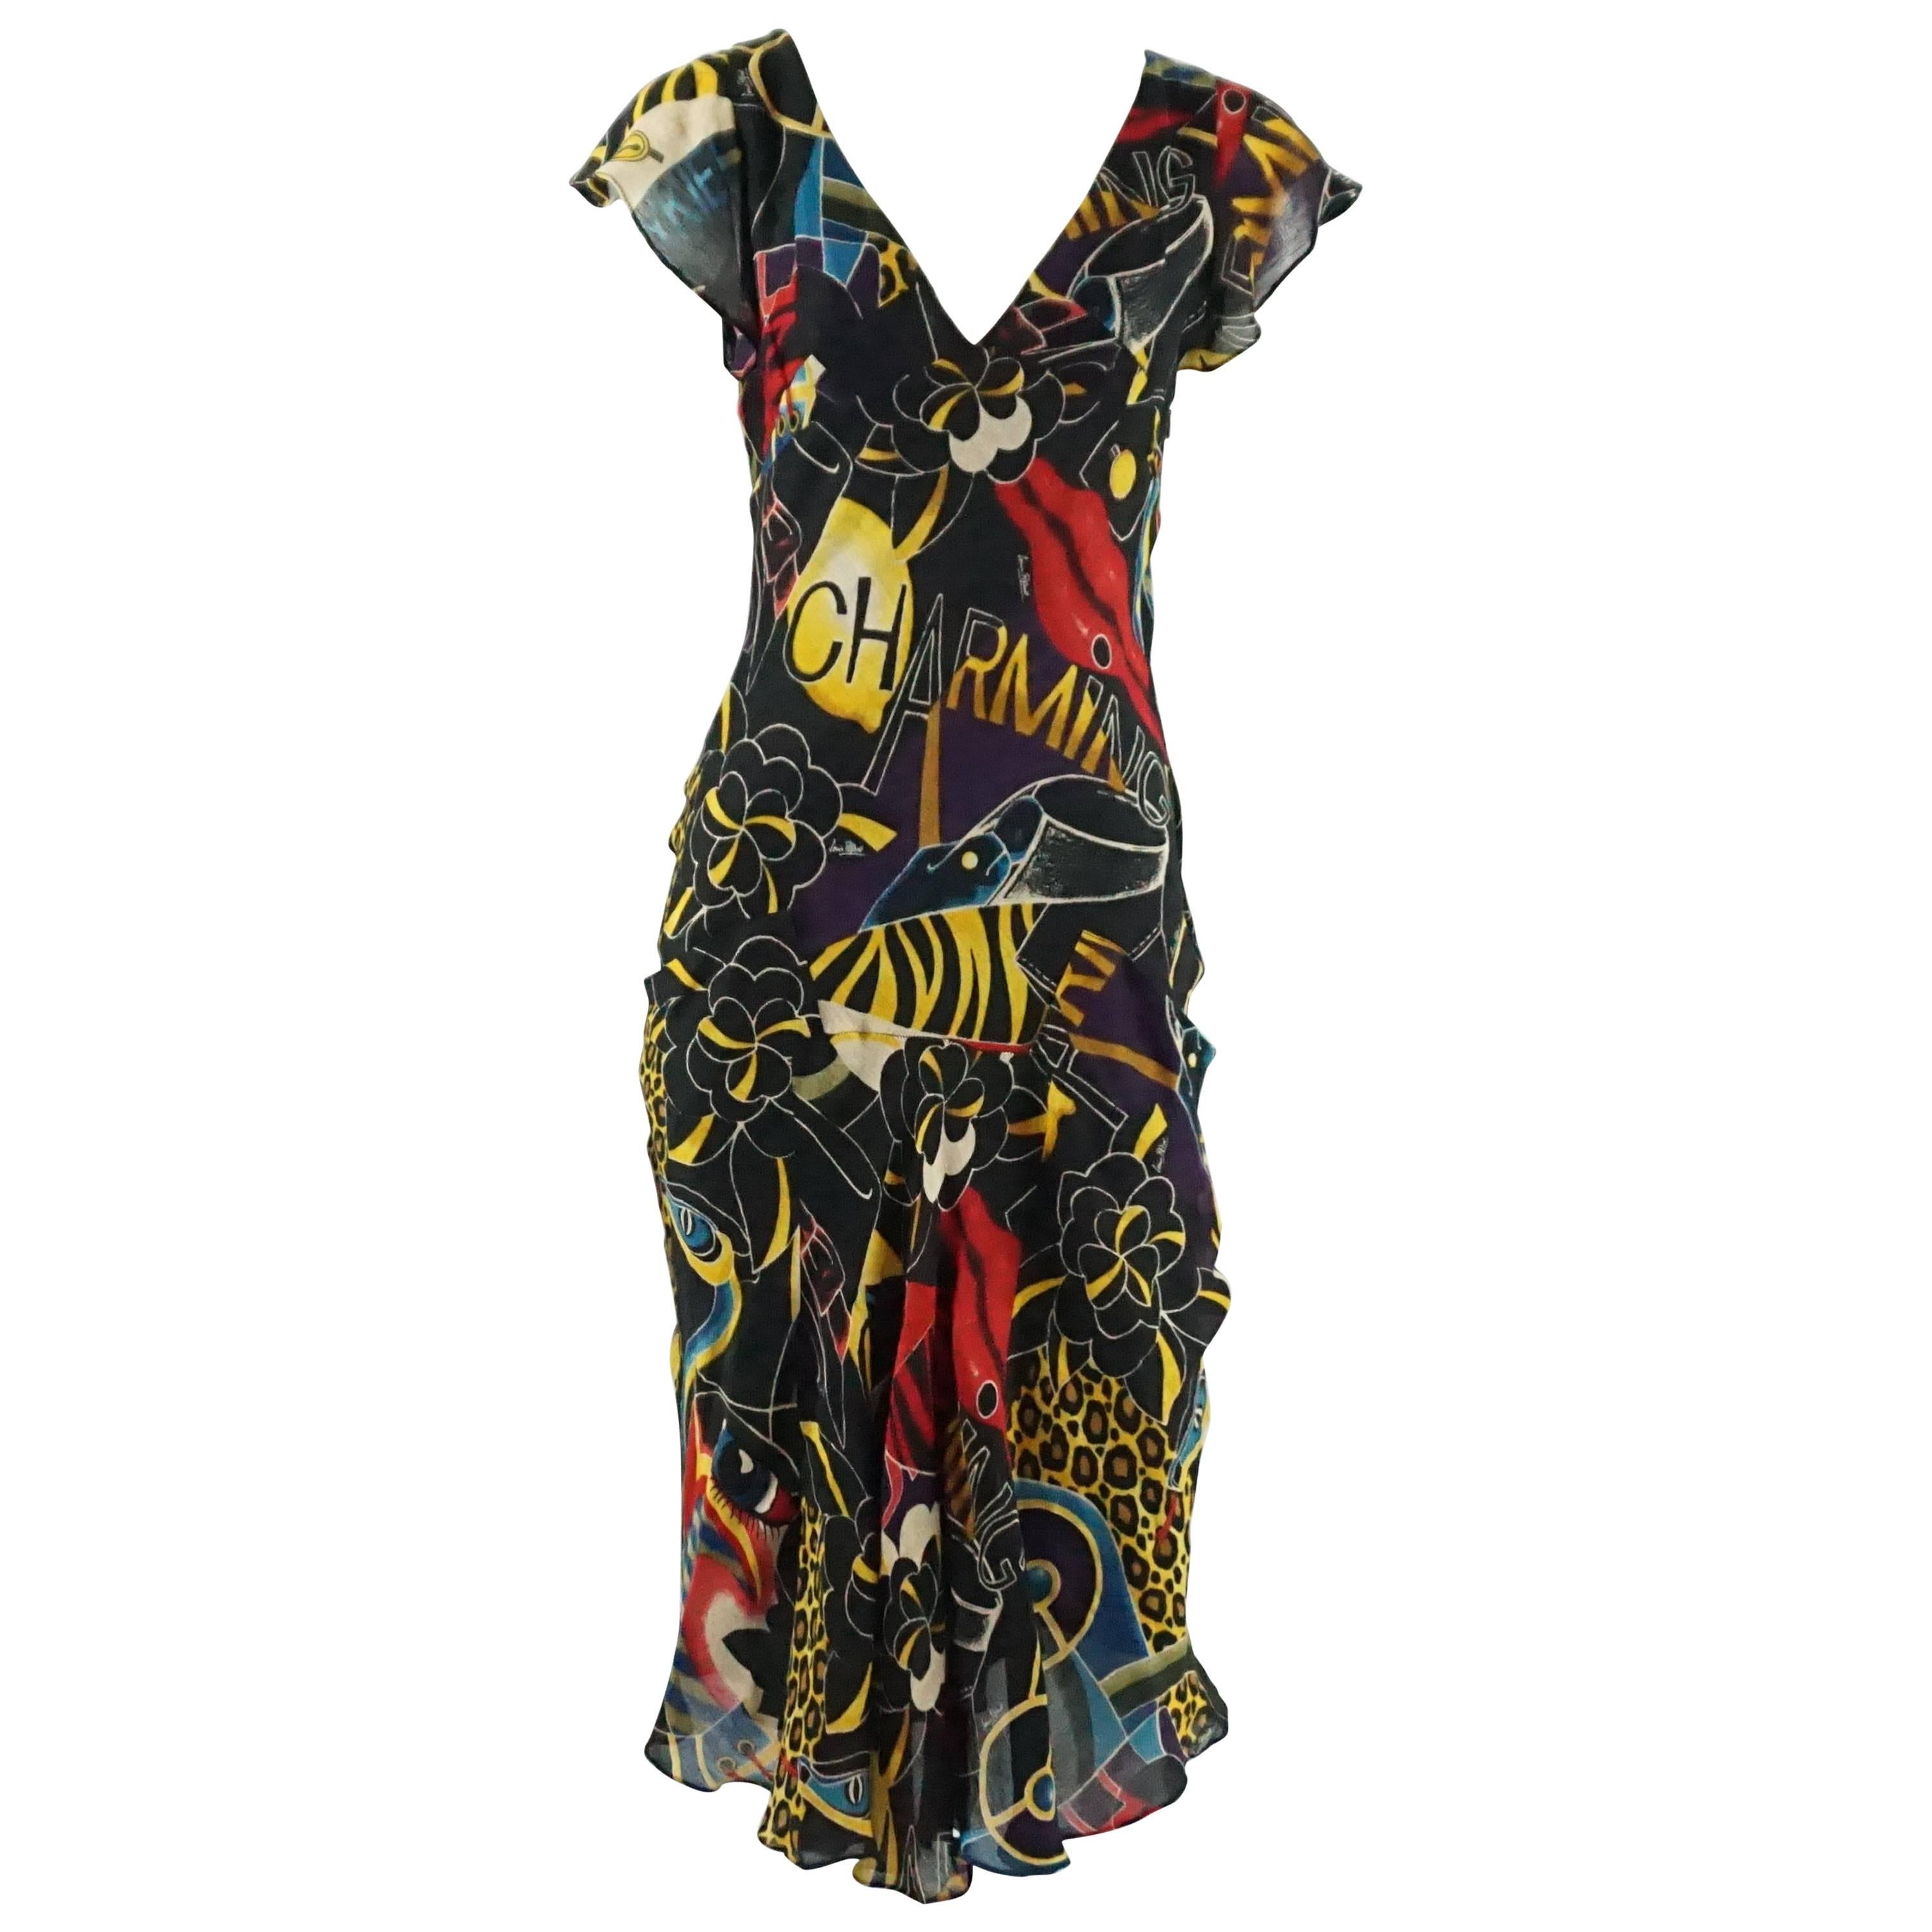 Sonia Rykiel Multi Pop Art Print Dress with Pockets - 36